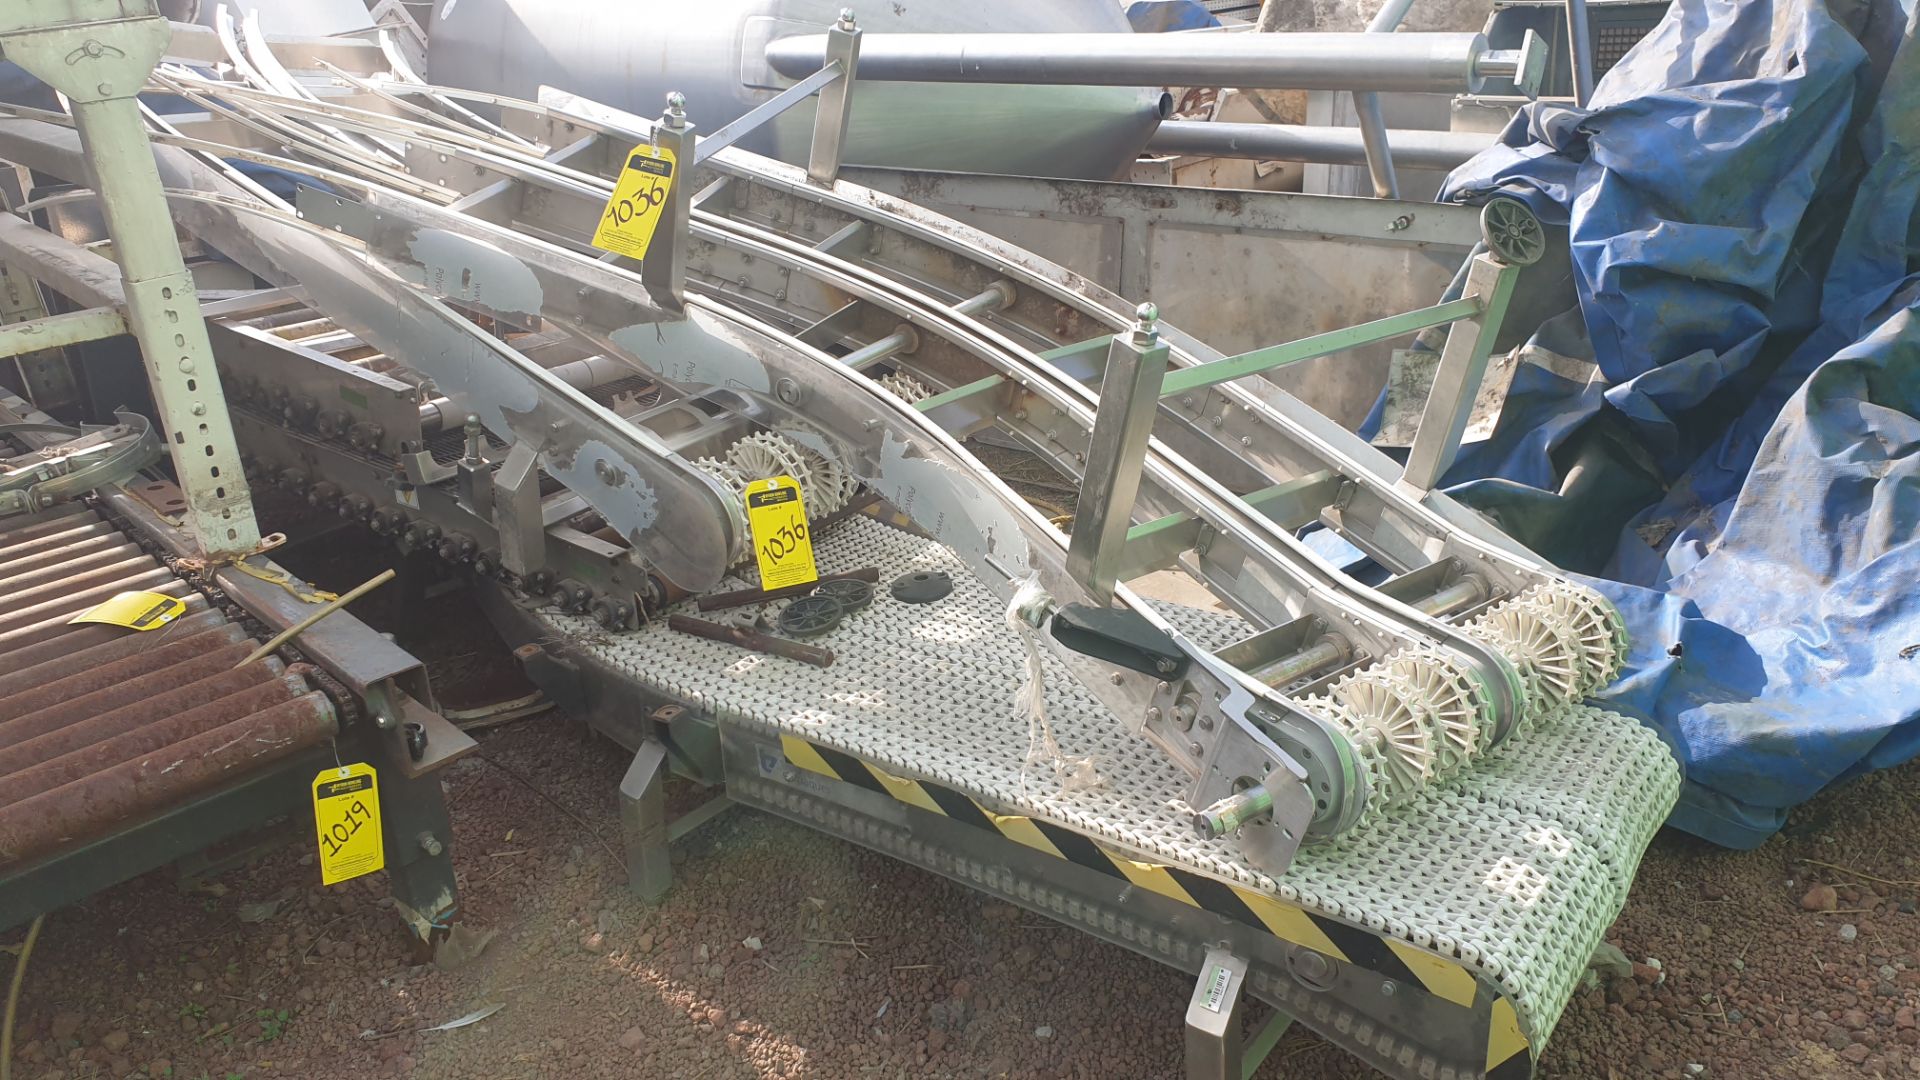 S conveyor belt batch. Please inspect